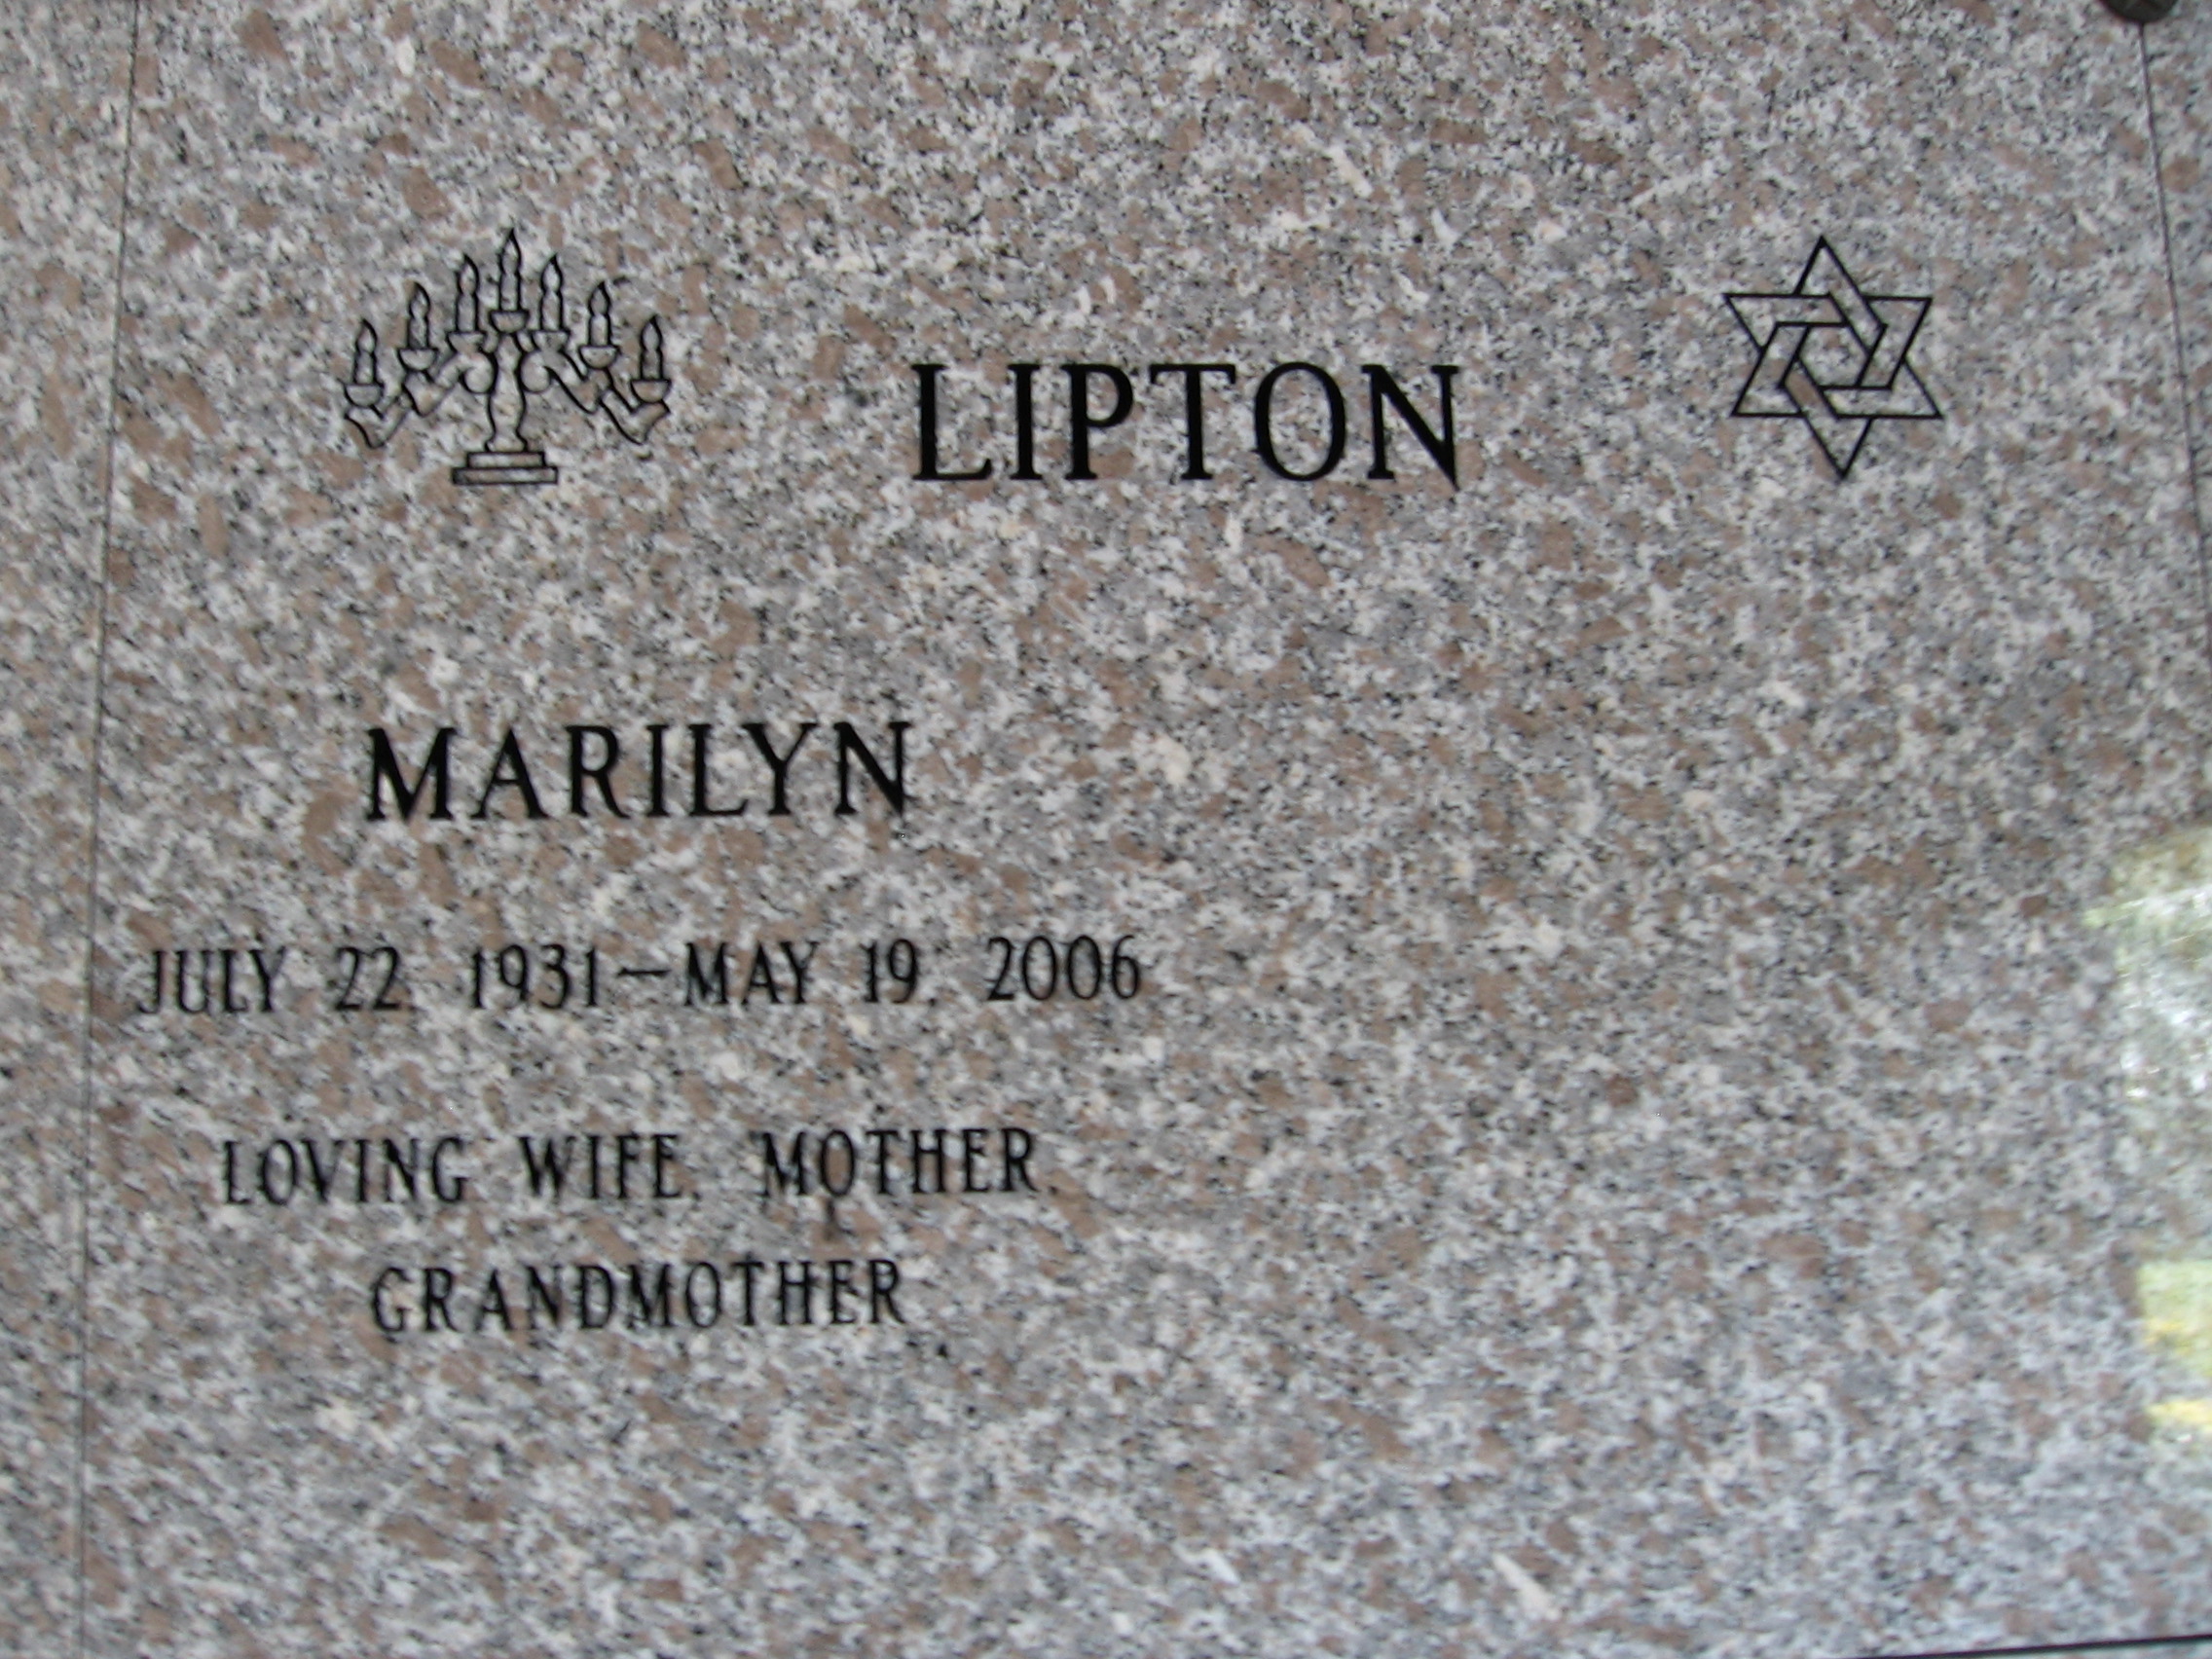 Marilyn Lipton